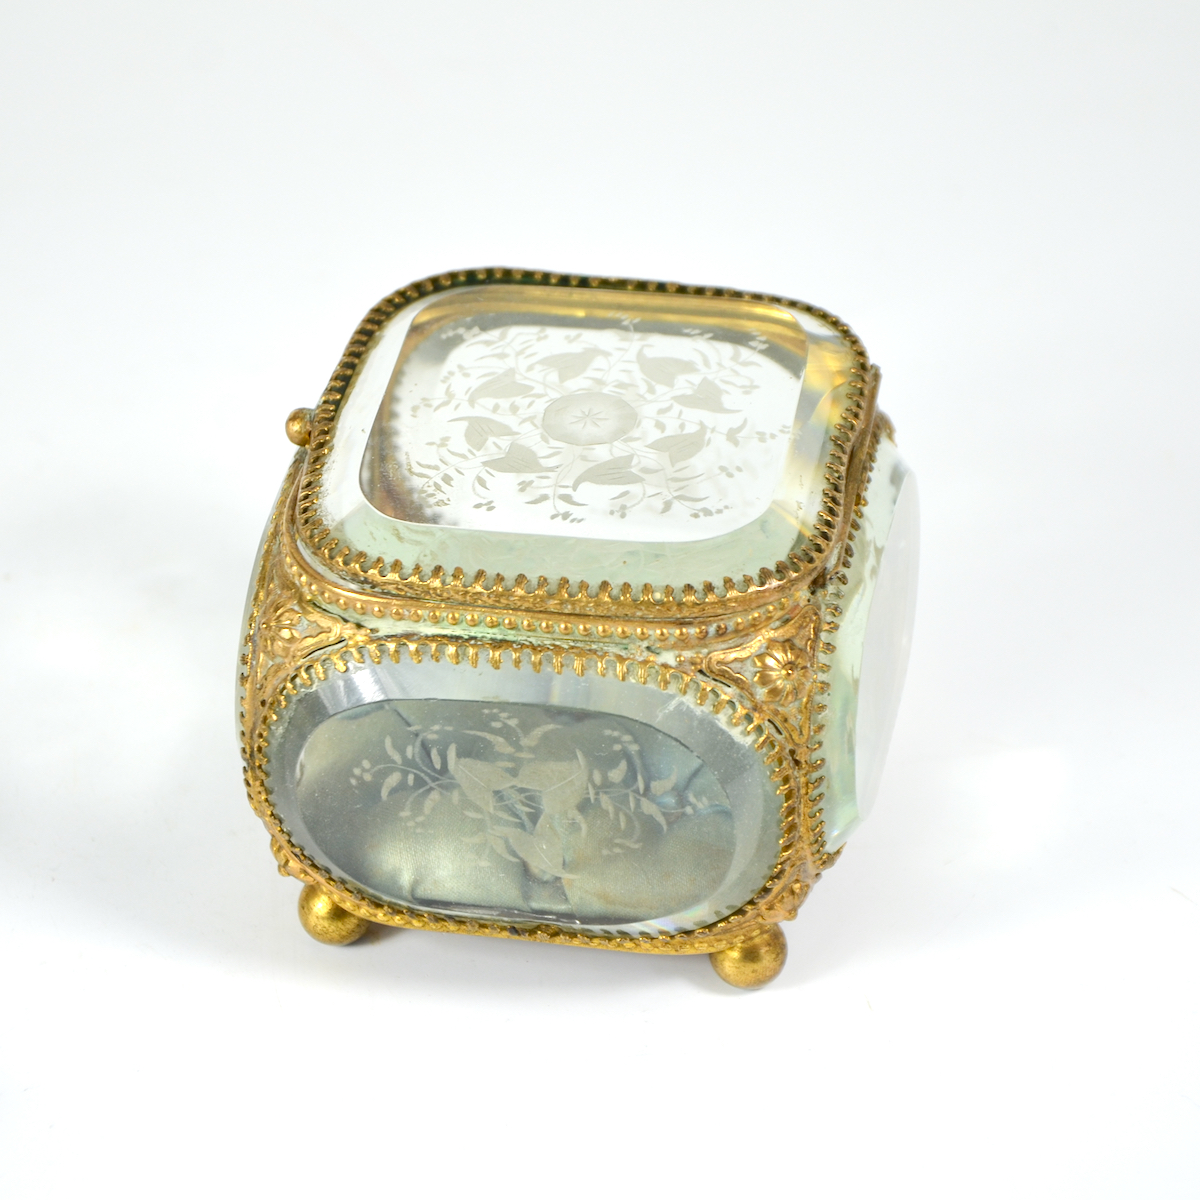 Vintage Gold ~ Brass Glass Jewelry Box, 1950's Brass Floral Jewelry Box  with Glass Top and Glass Interior, Vintage Jewelry storage